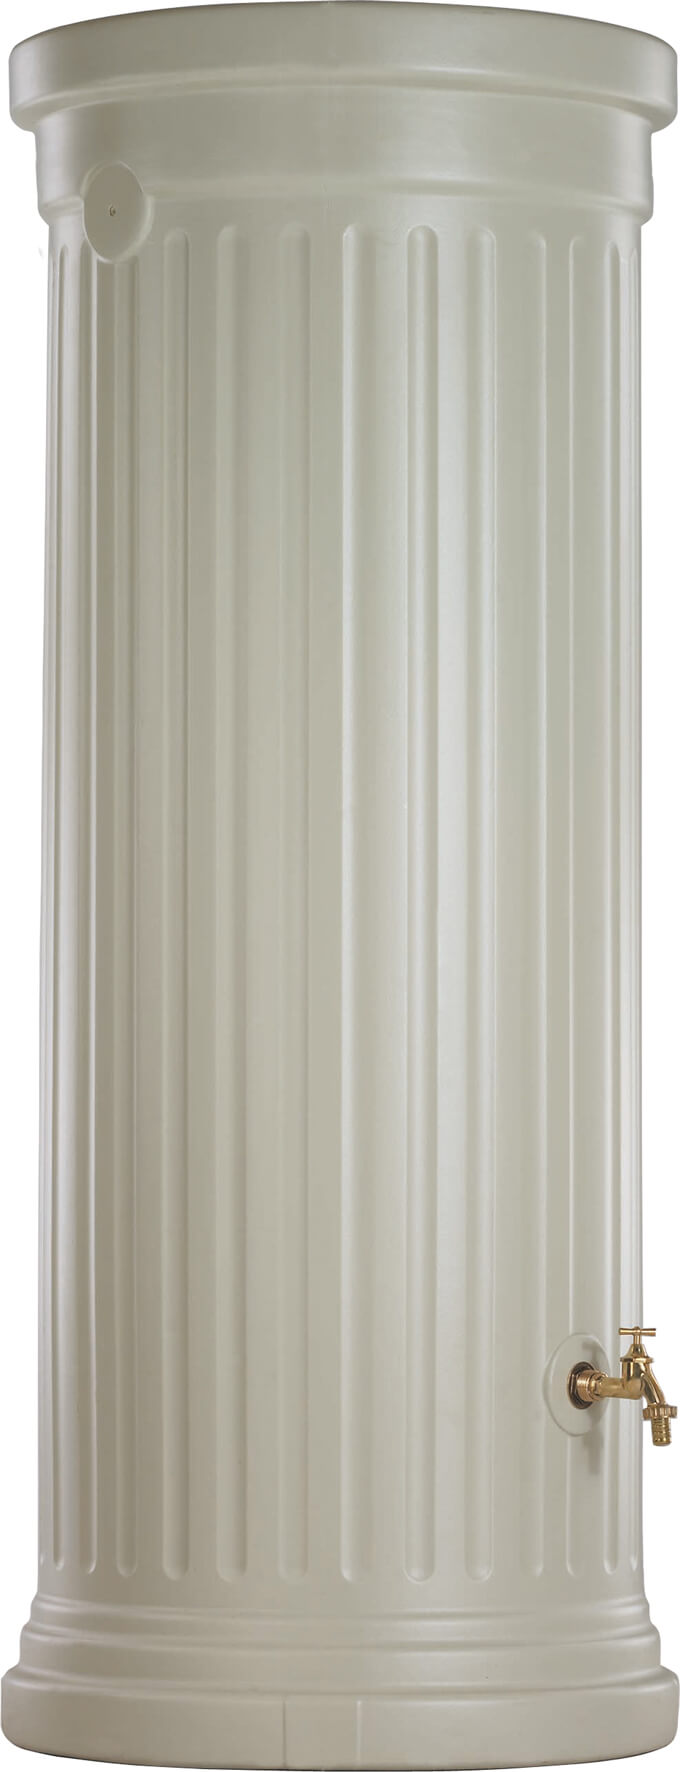 GARANTIA Säulen-Regentonne, sandbeige 500/1.000 Liter